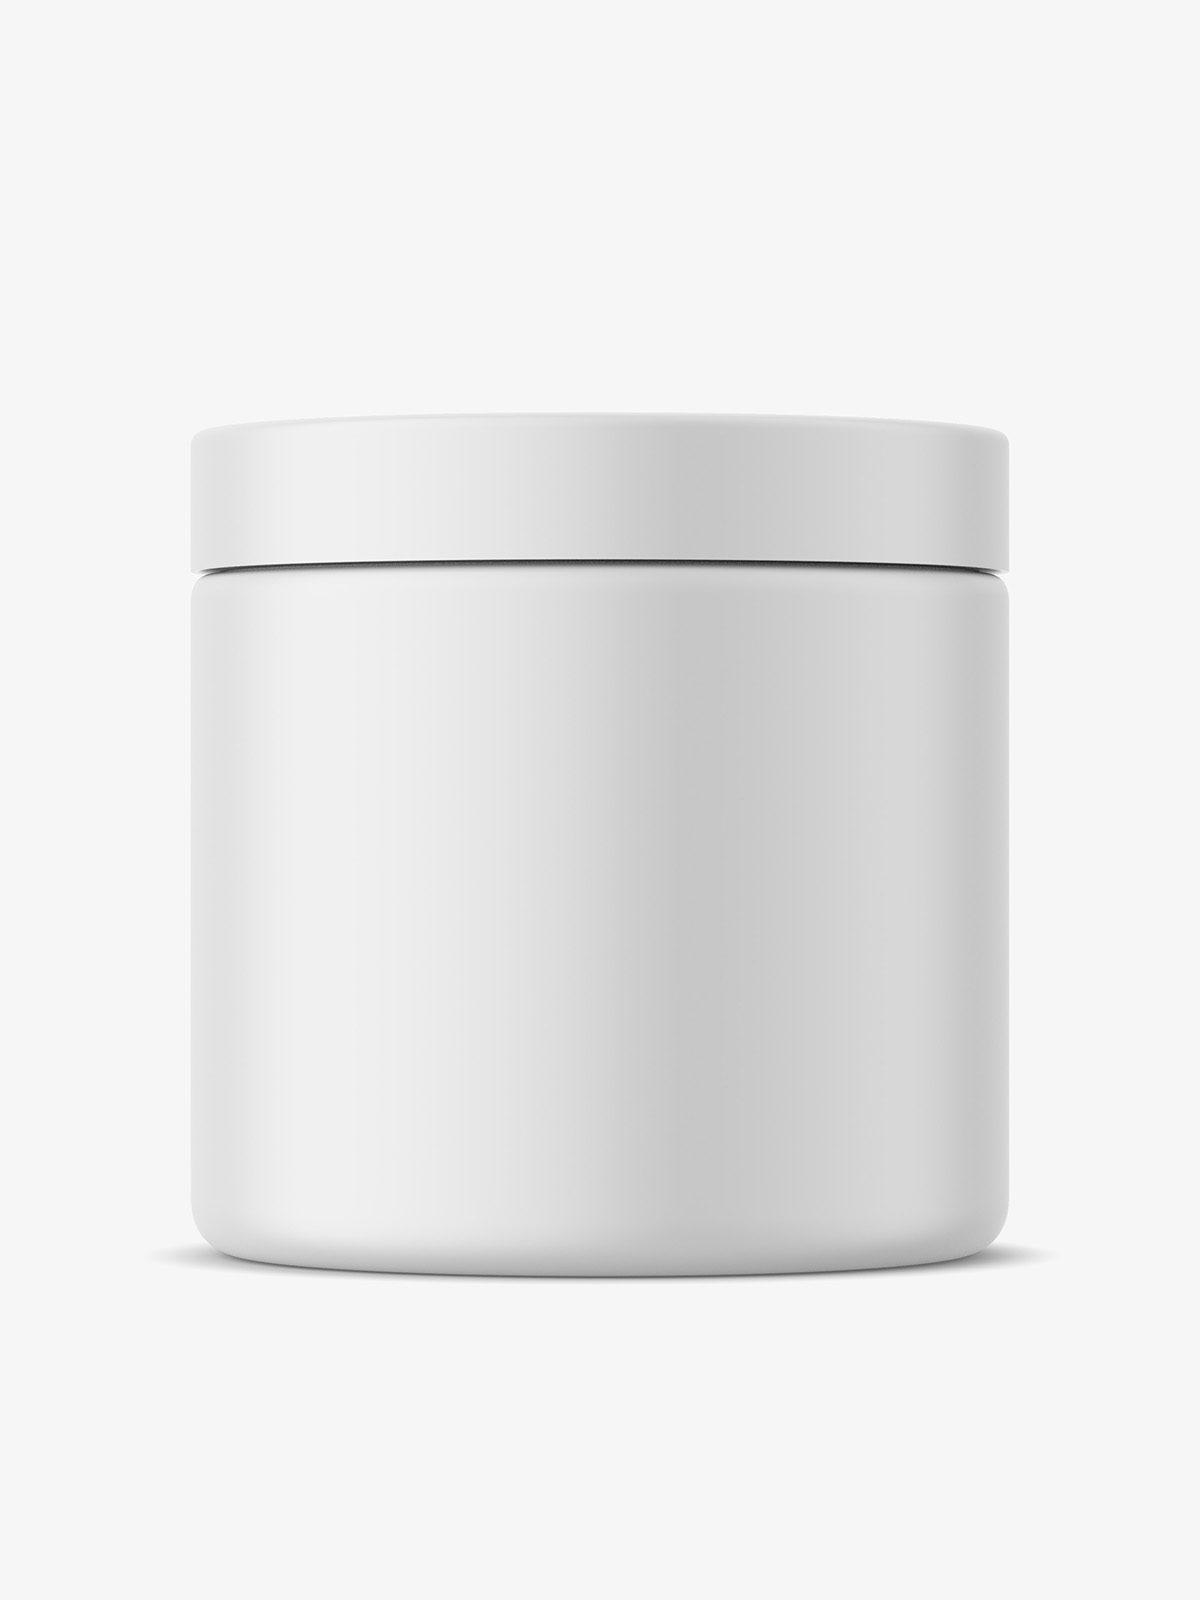 Download Matt plastic jar mockup - Smarty Mockups